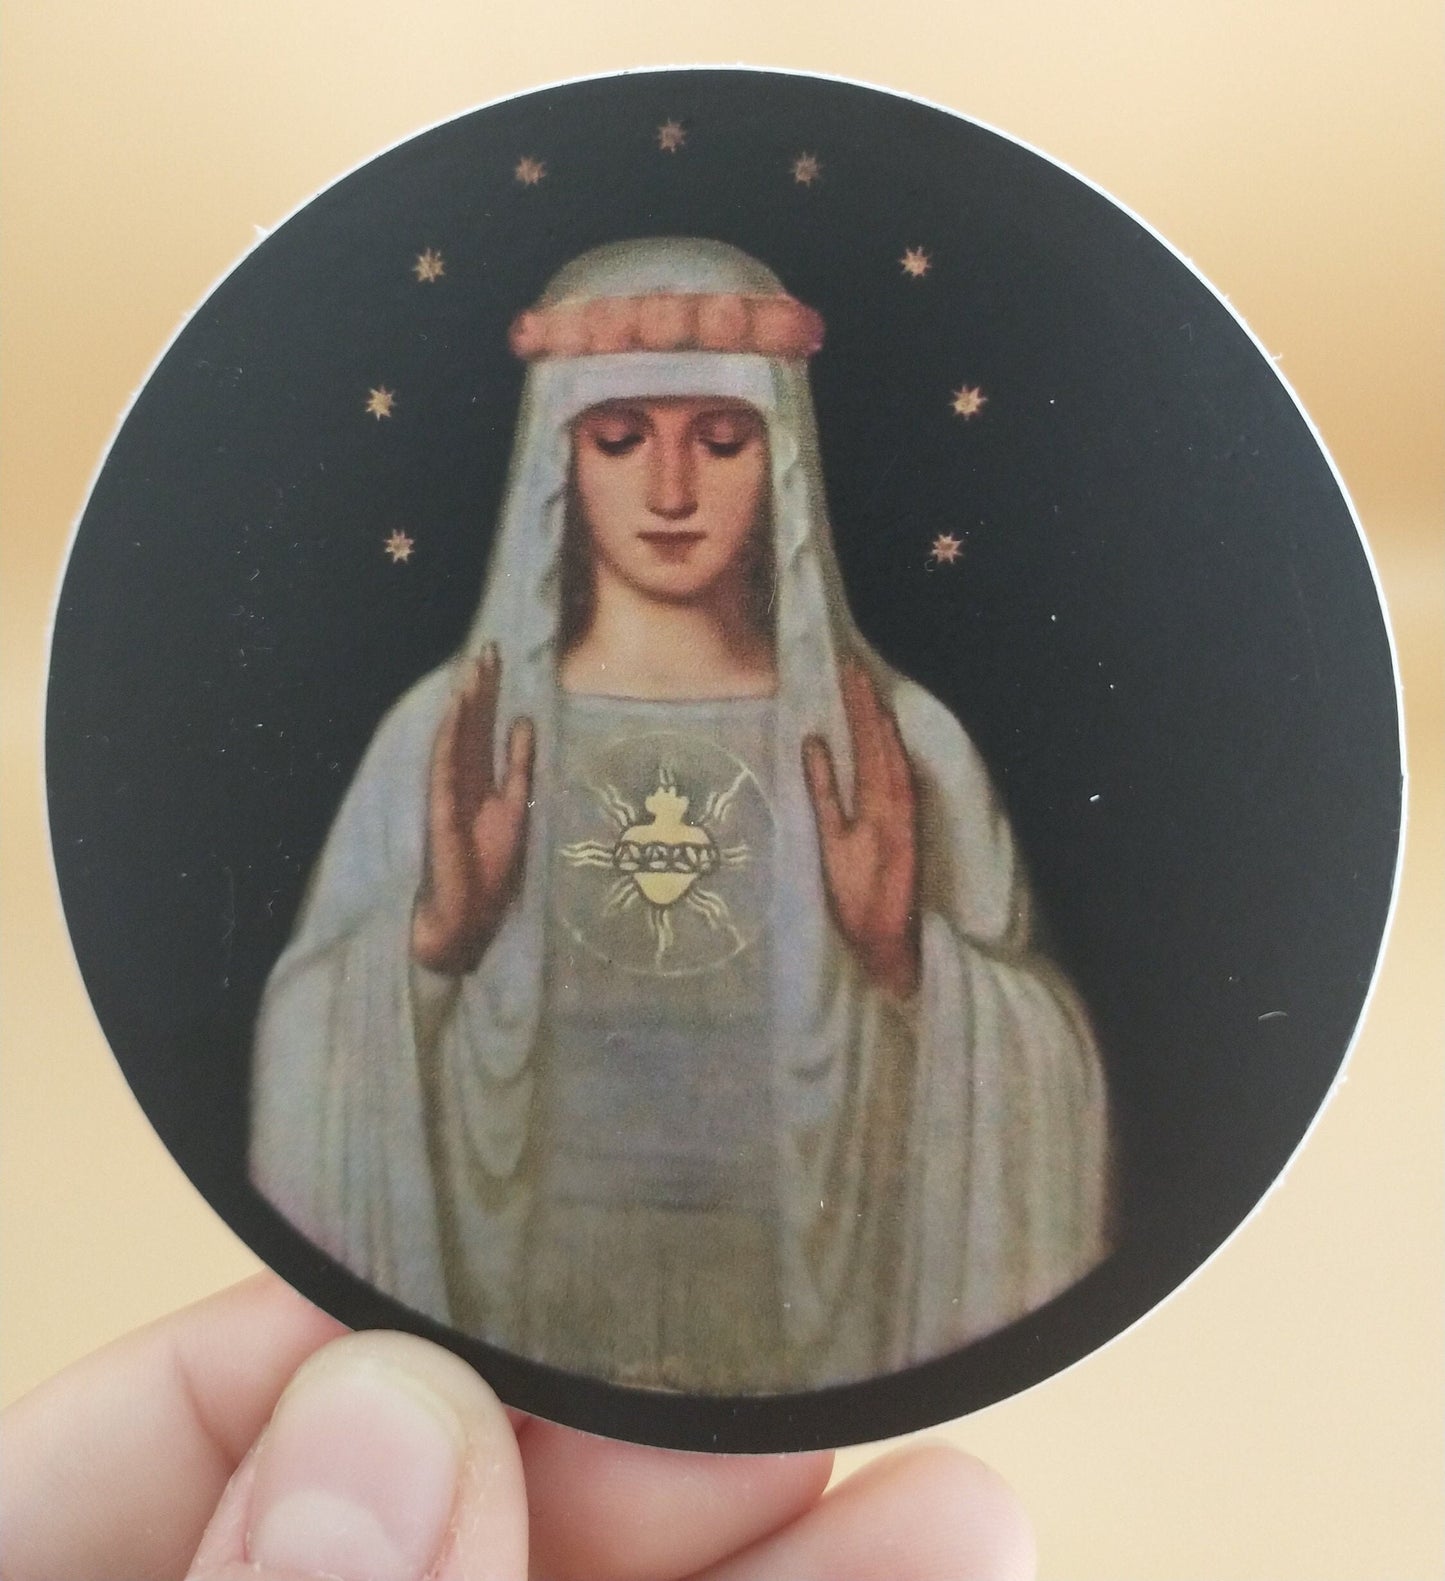 Sticker–Immaculate Heart of Mary – by Fritz Kunz – Catholic Sticker – High Quality Vinyl